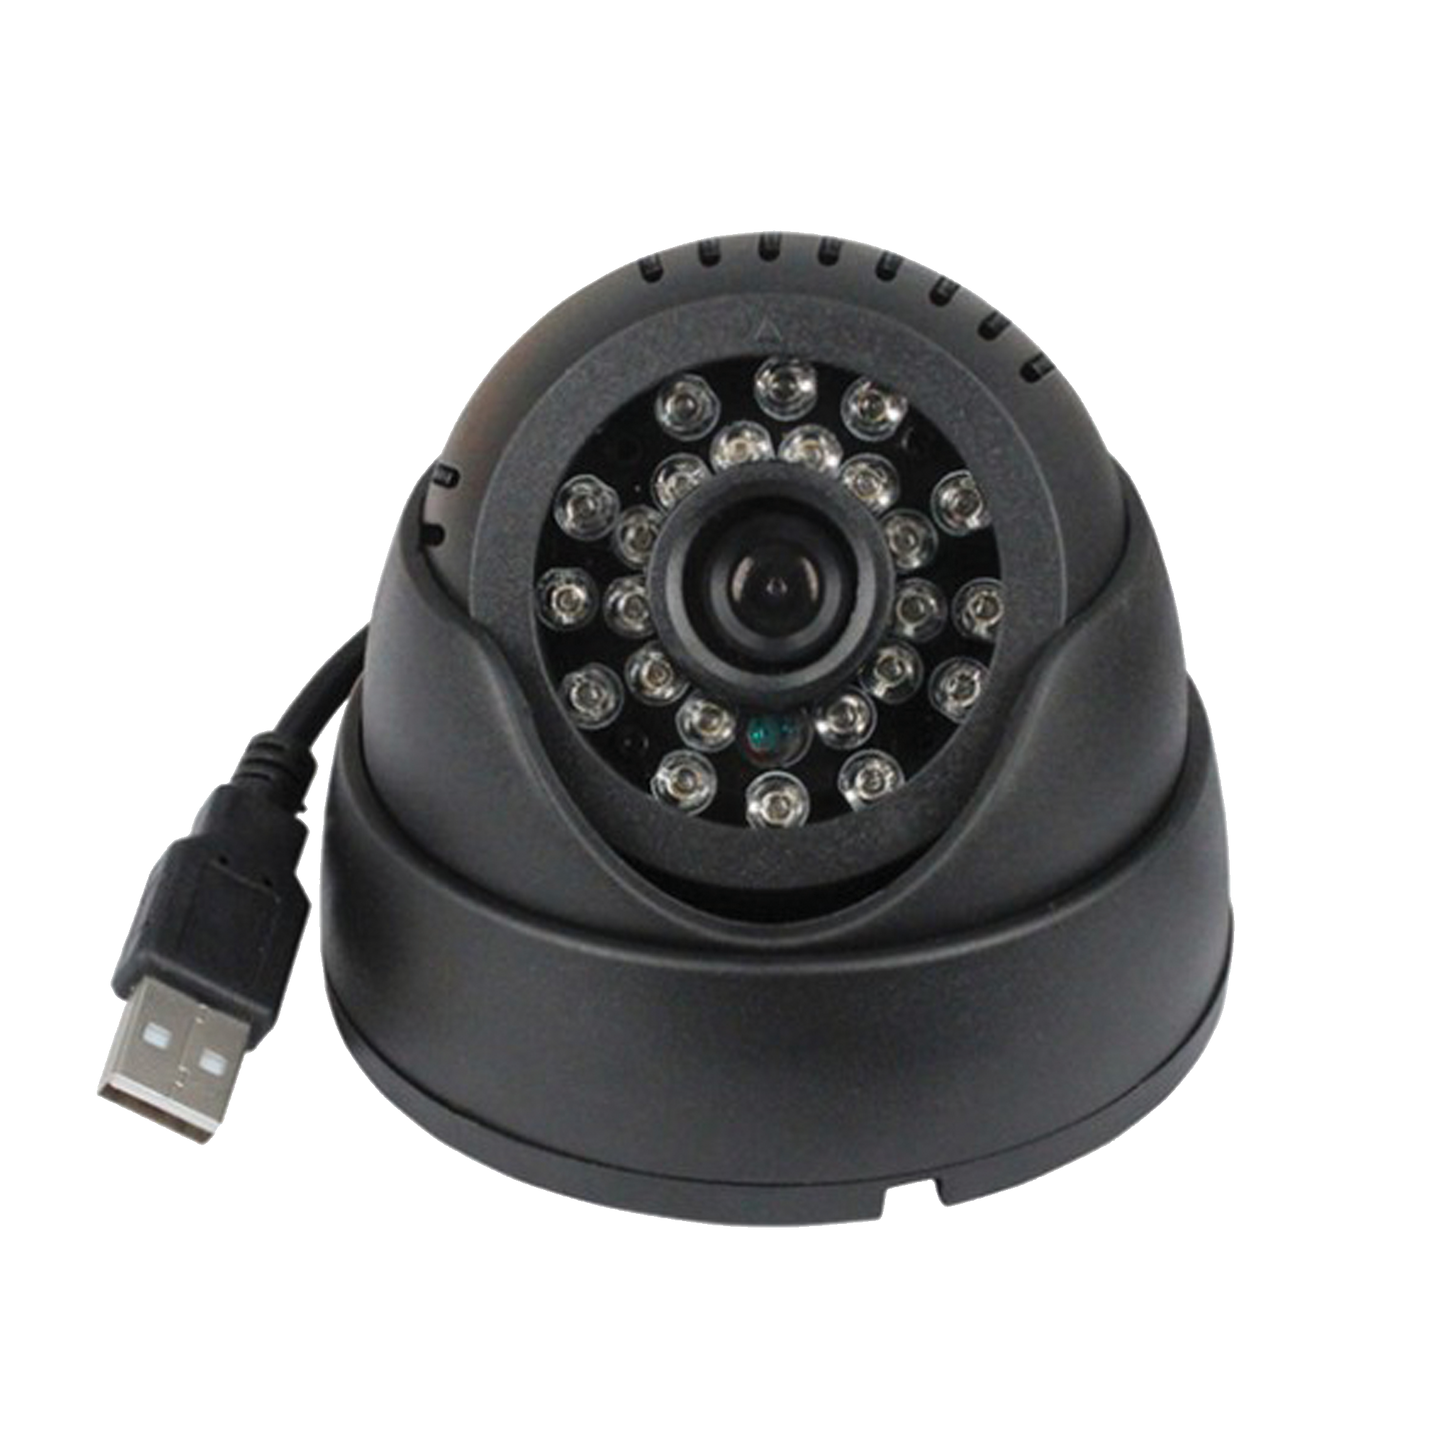 USB Dome Camera